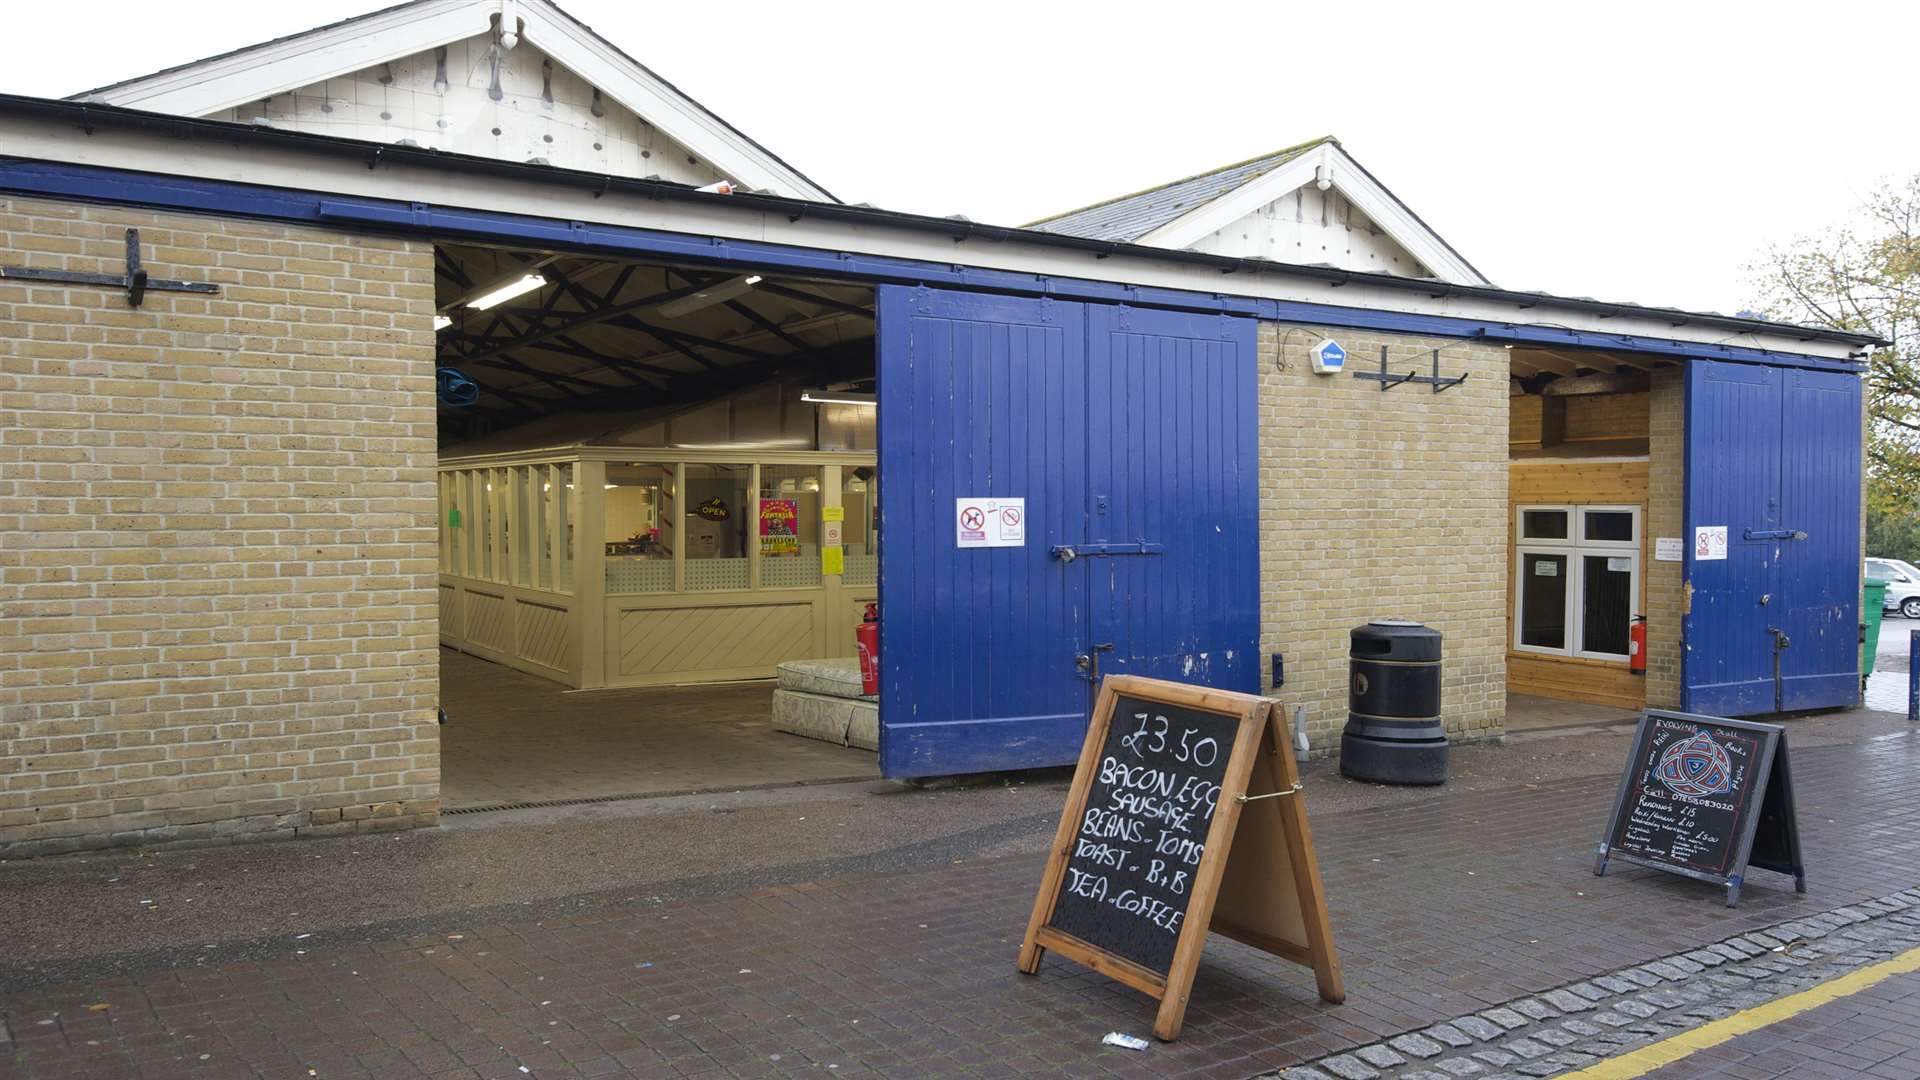 Gravesend market will reopen on December 3